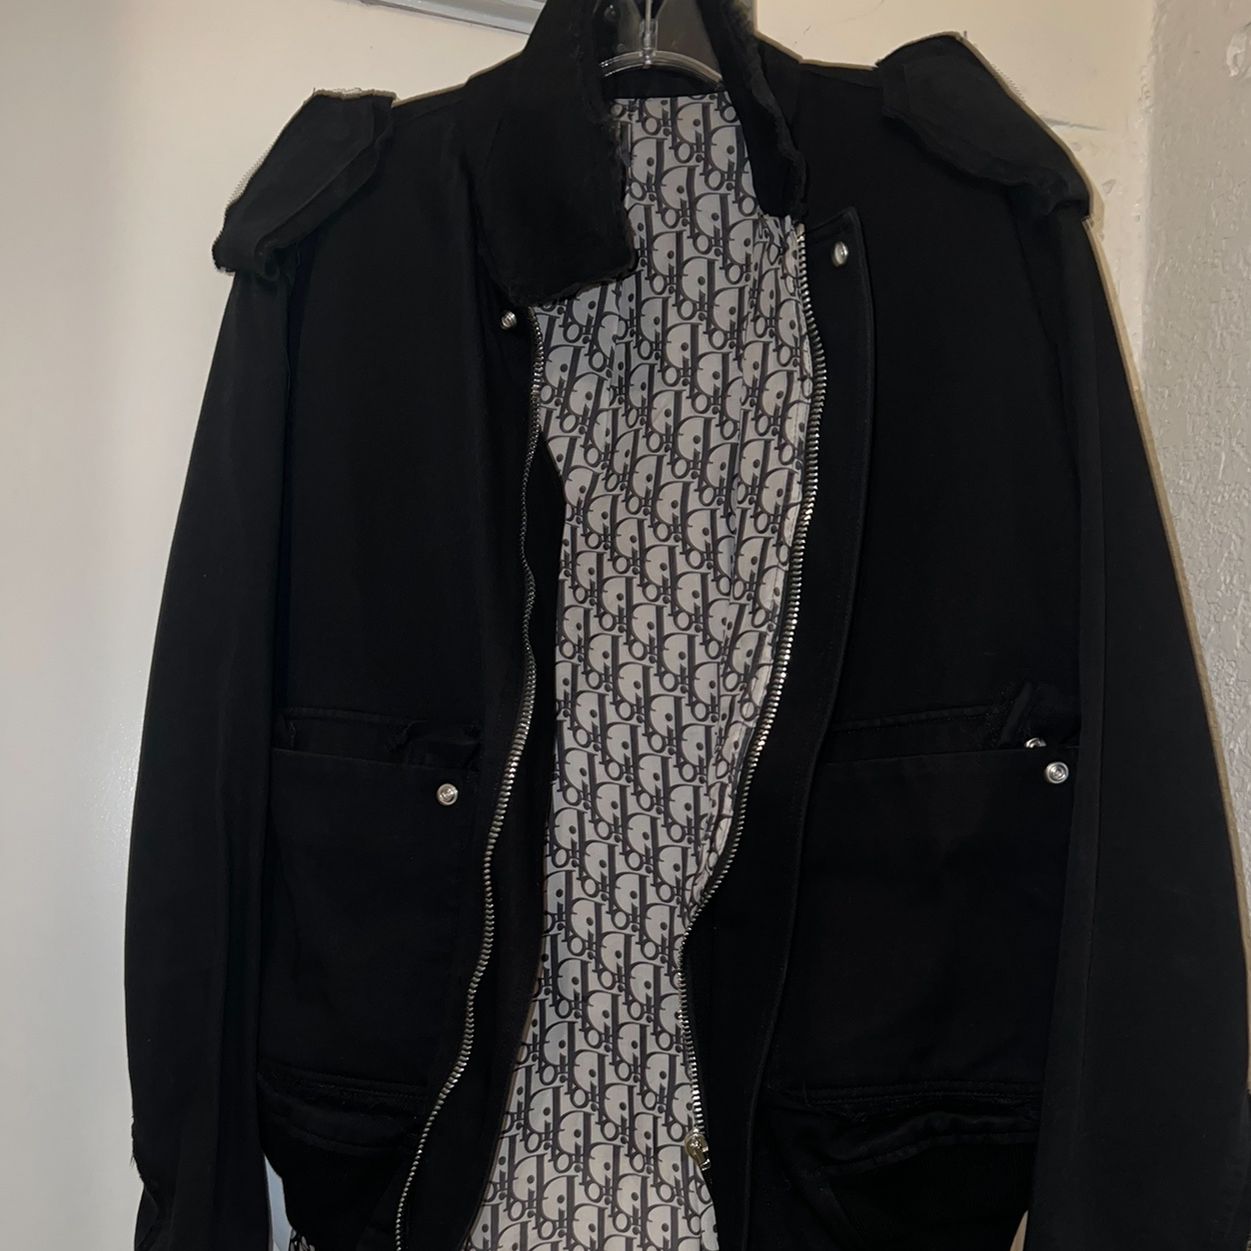 Unisex Dior Jacket (Retail Price $1600) Save $$$$